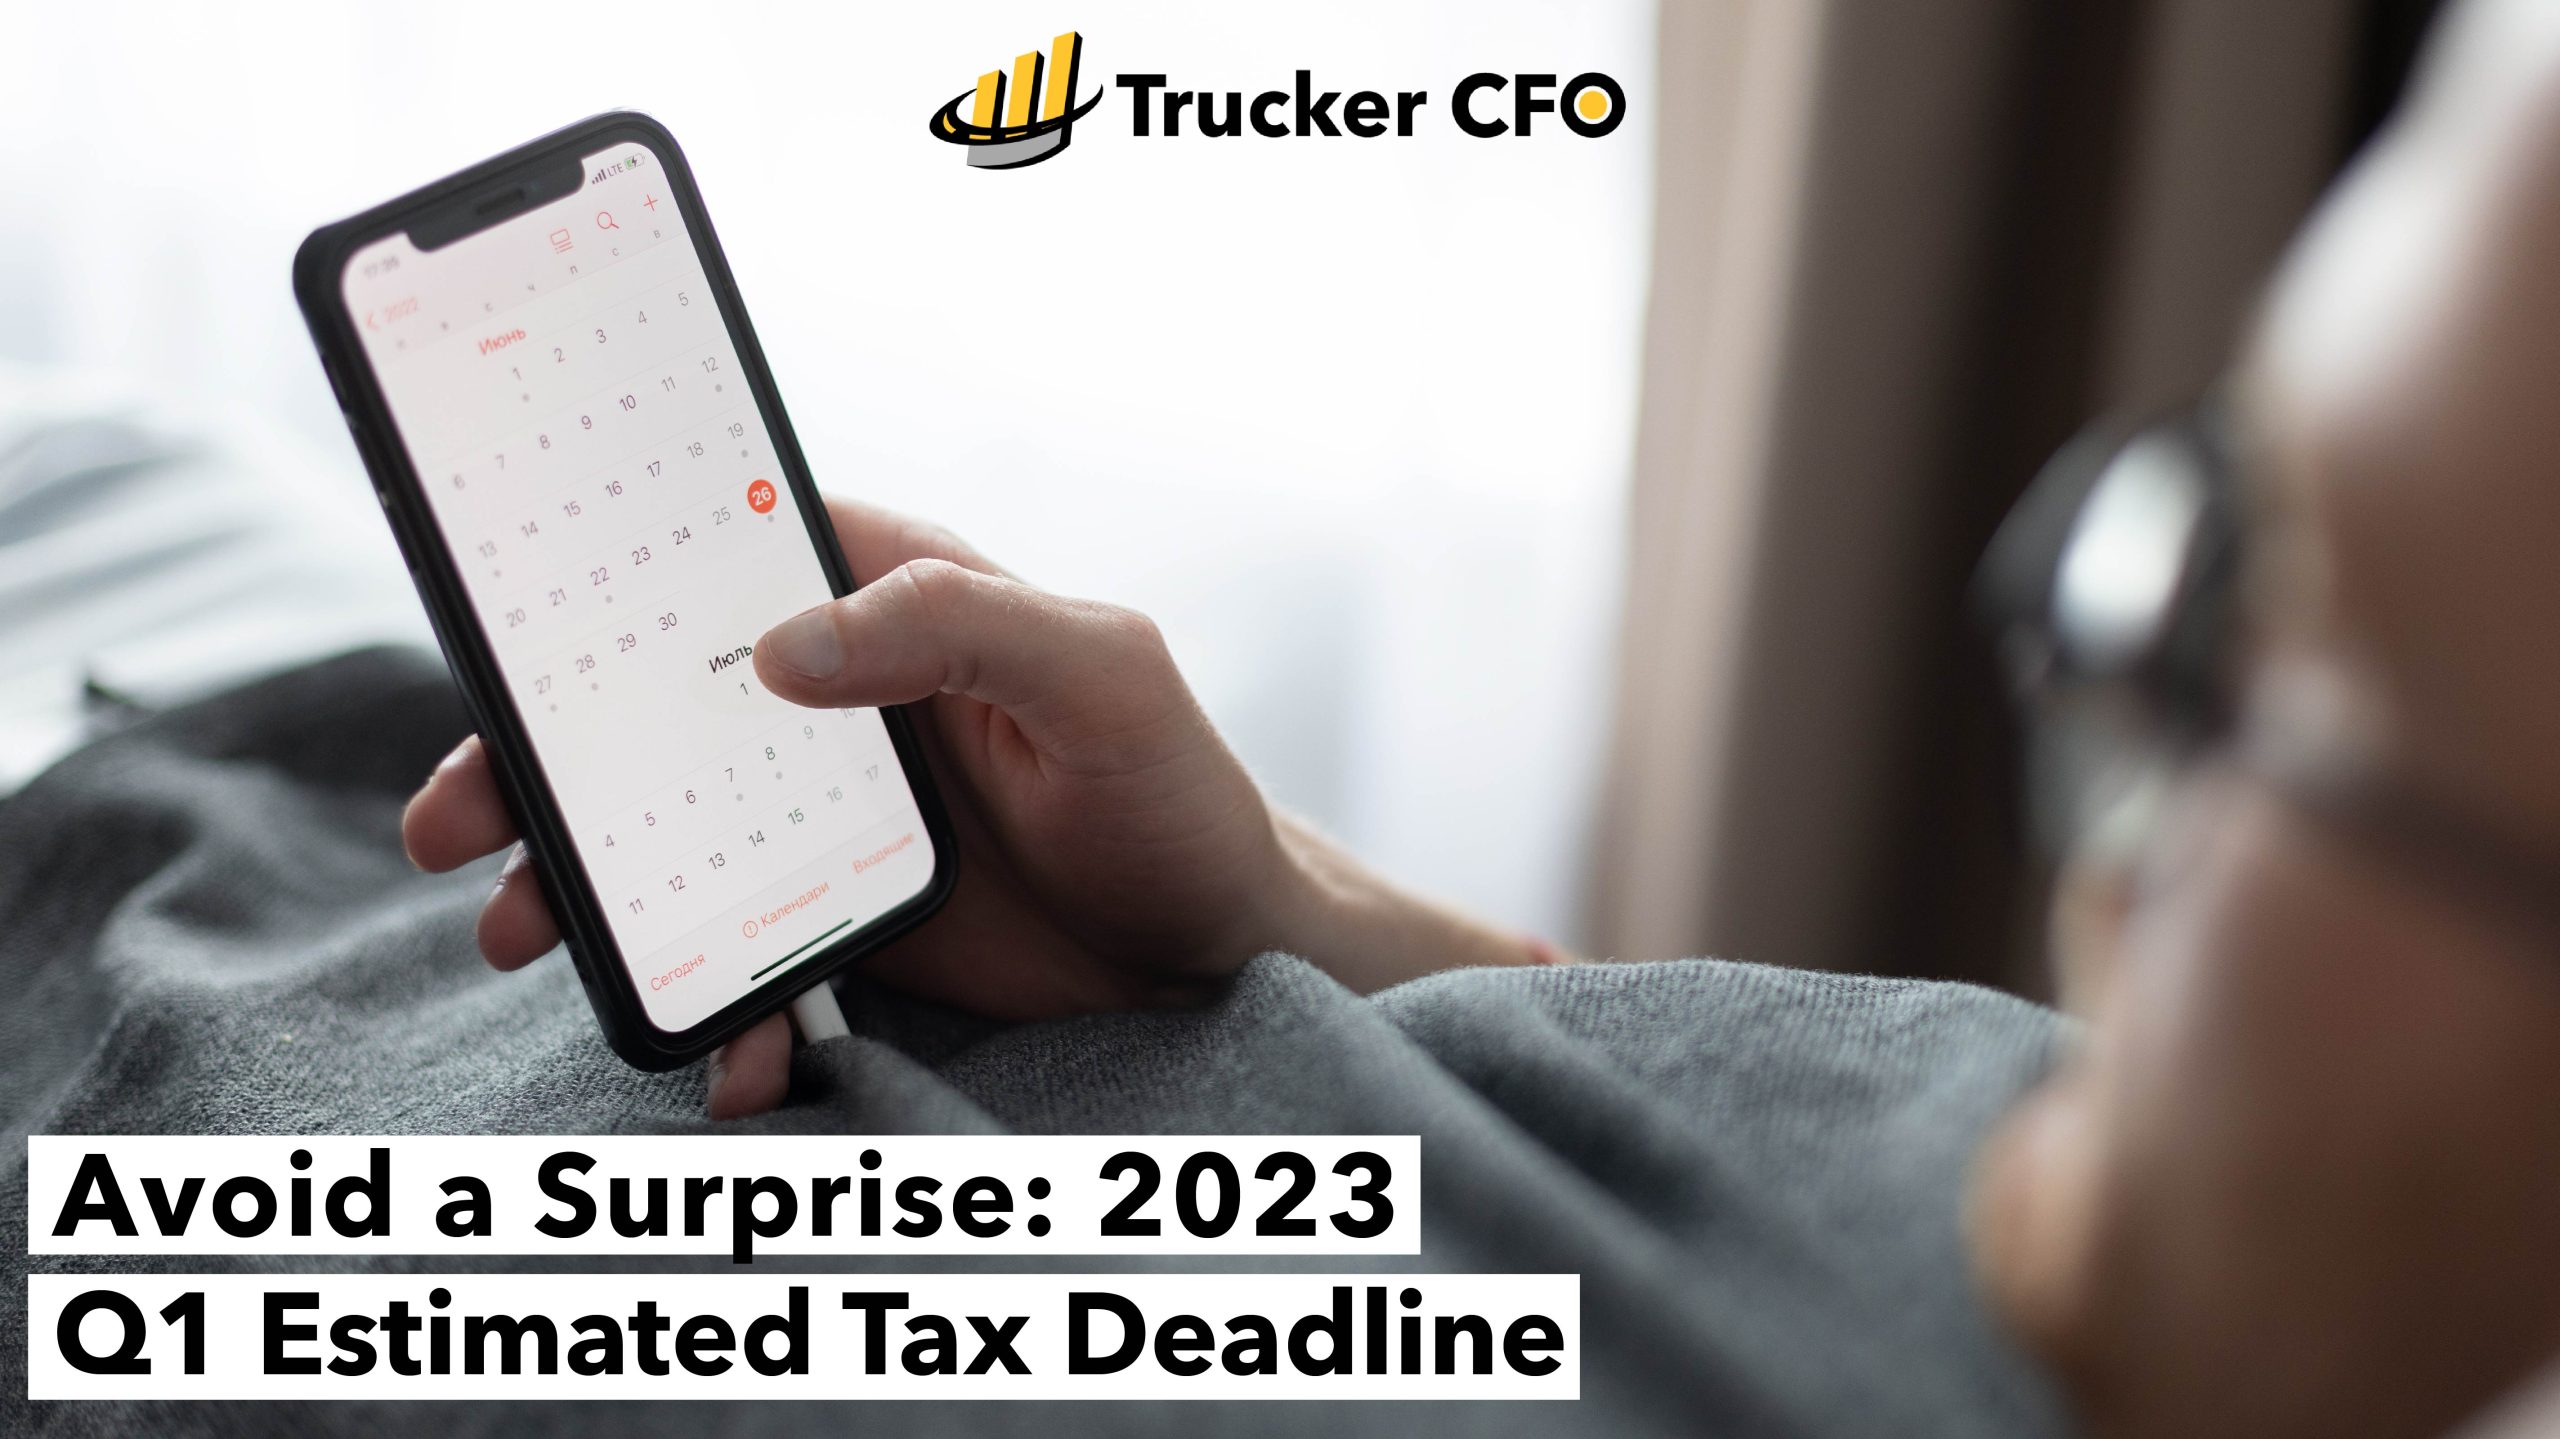 Q1 Estimated Tax Deadline for 2023